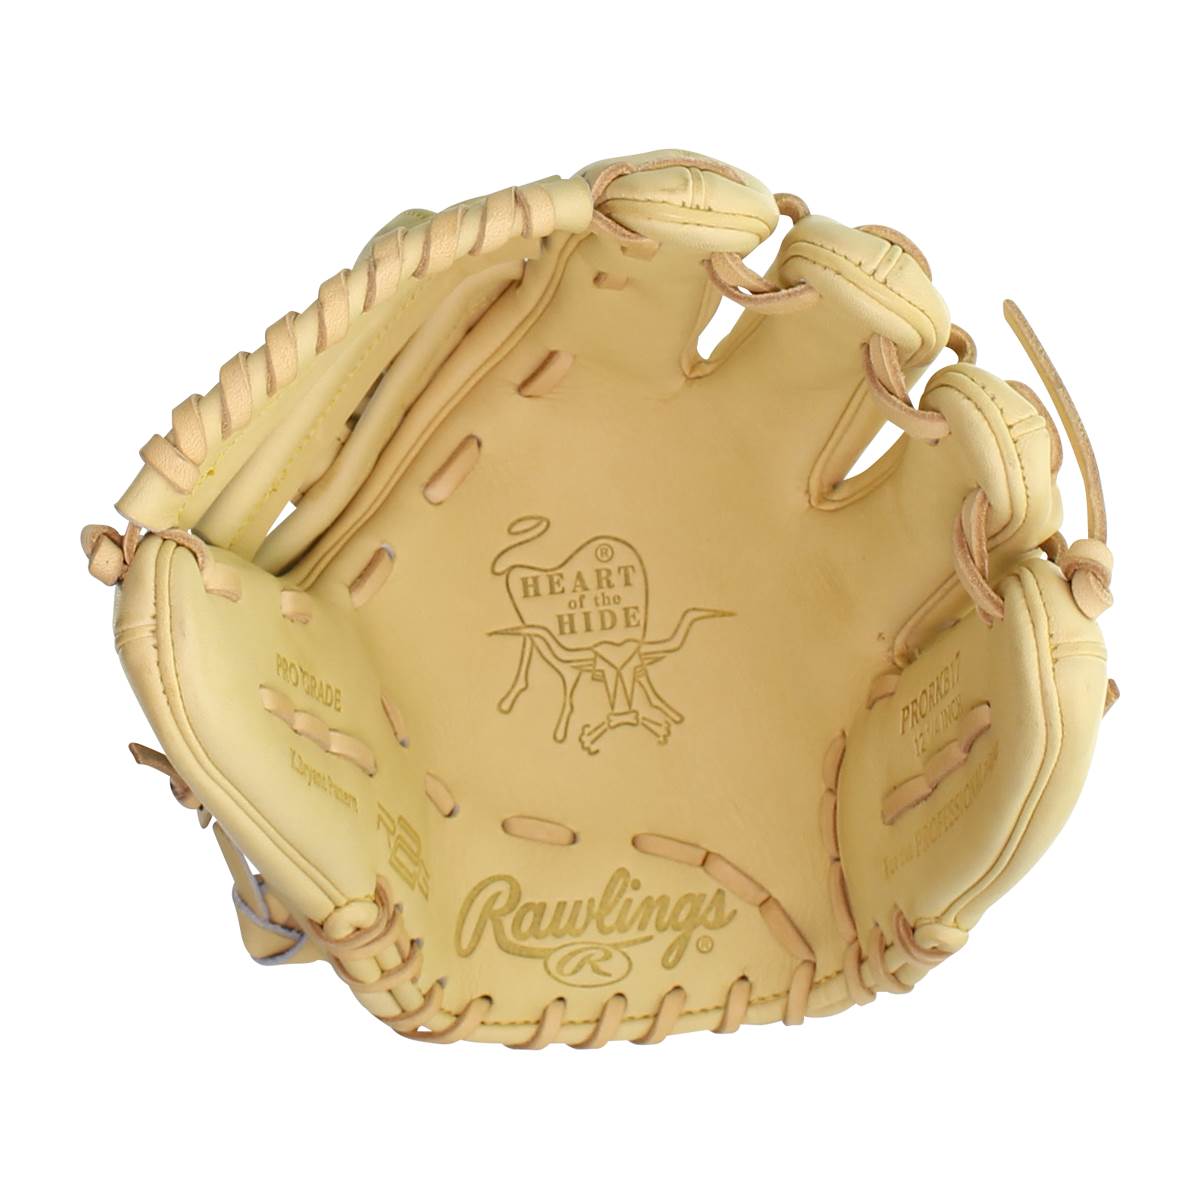 Rawlings Heart of the Hide R2G Kris Bryant 12.25" Baseball Glove